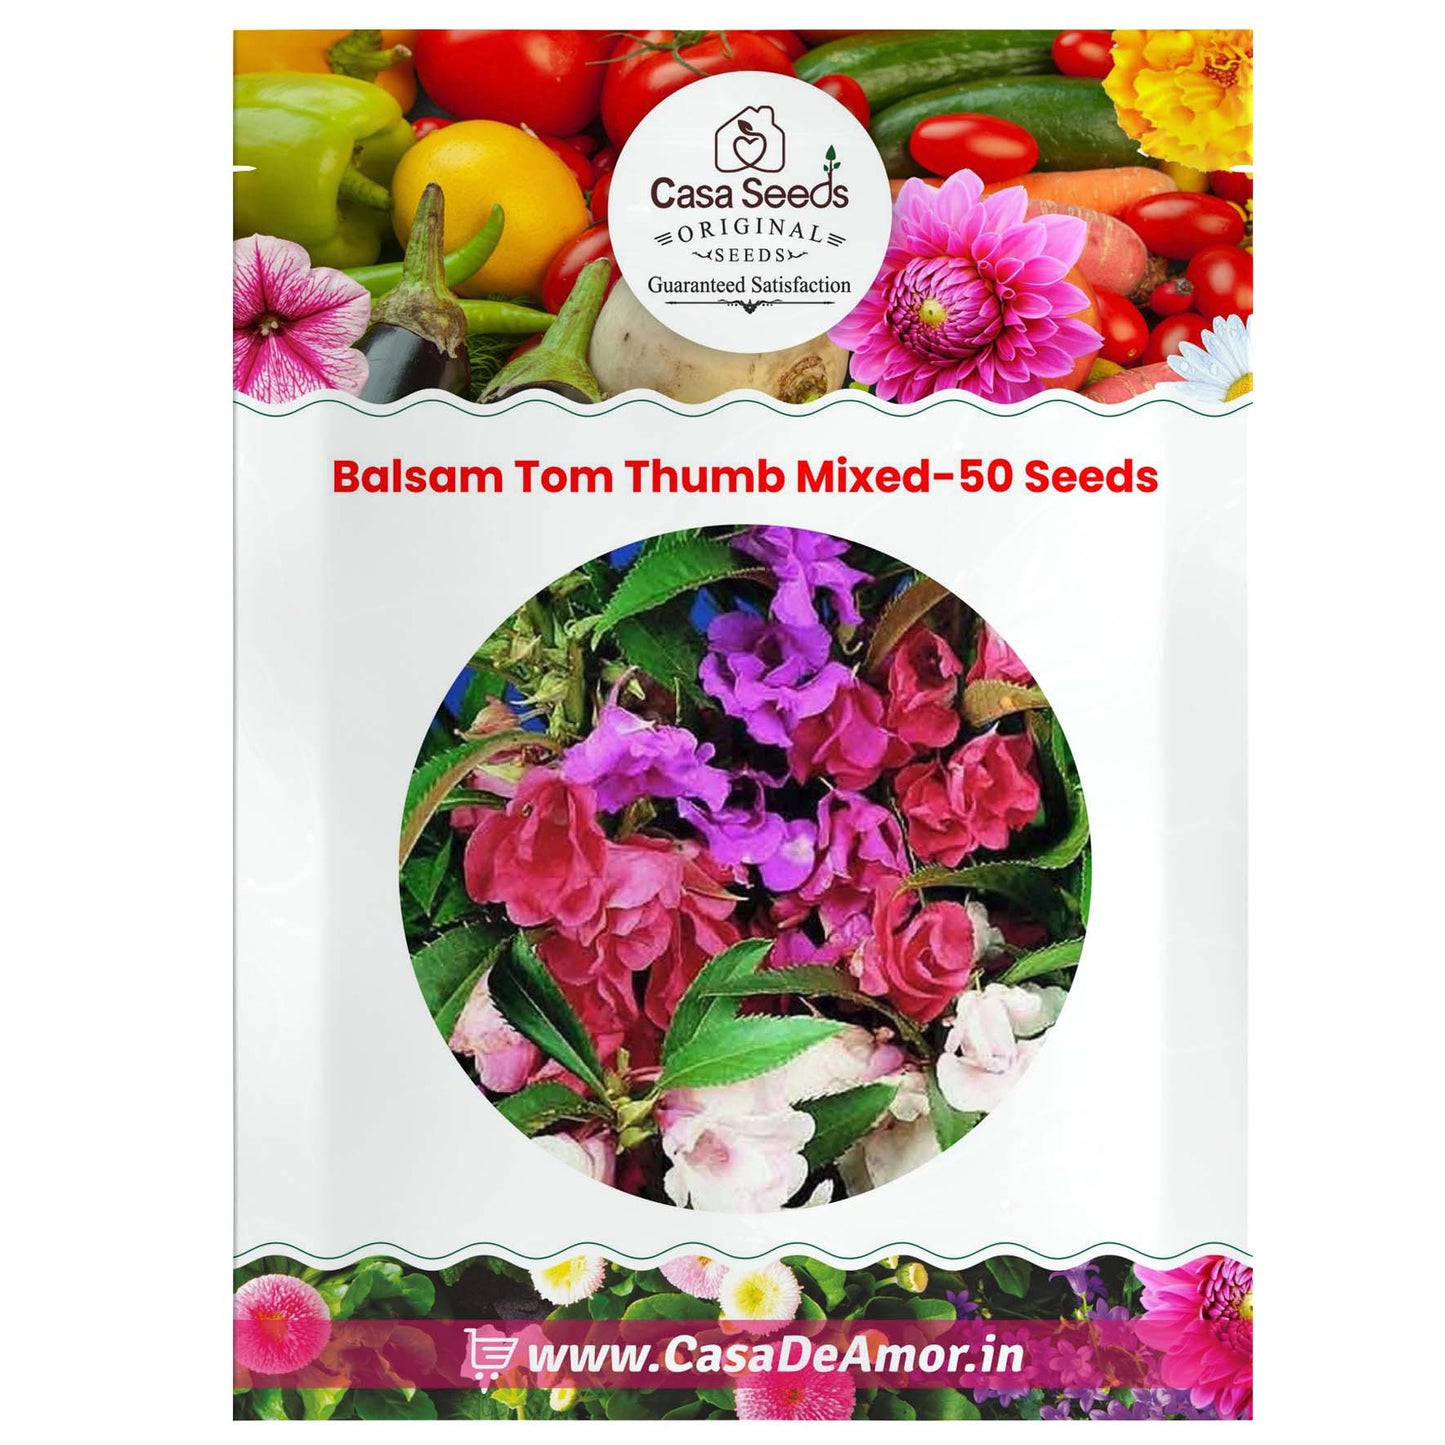 Balsam Tom Thumb Mixed-50 Seeds